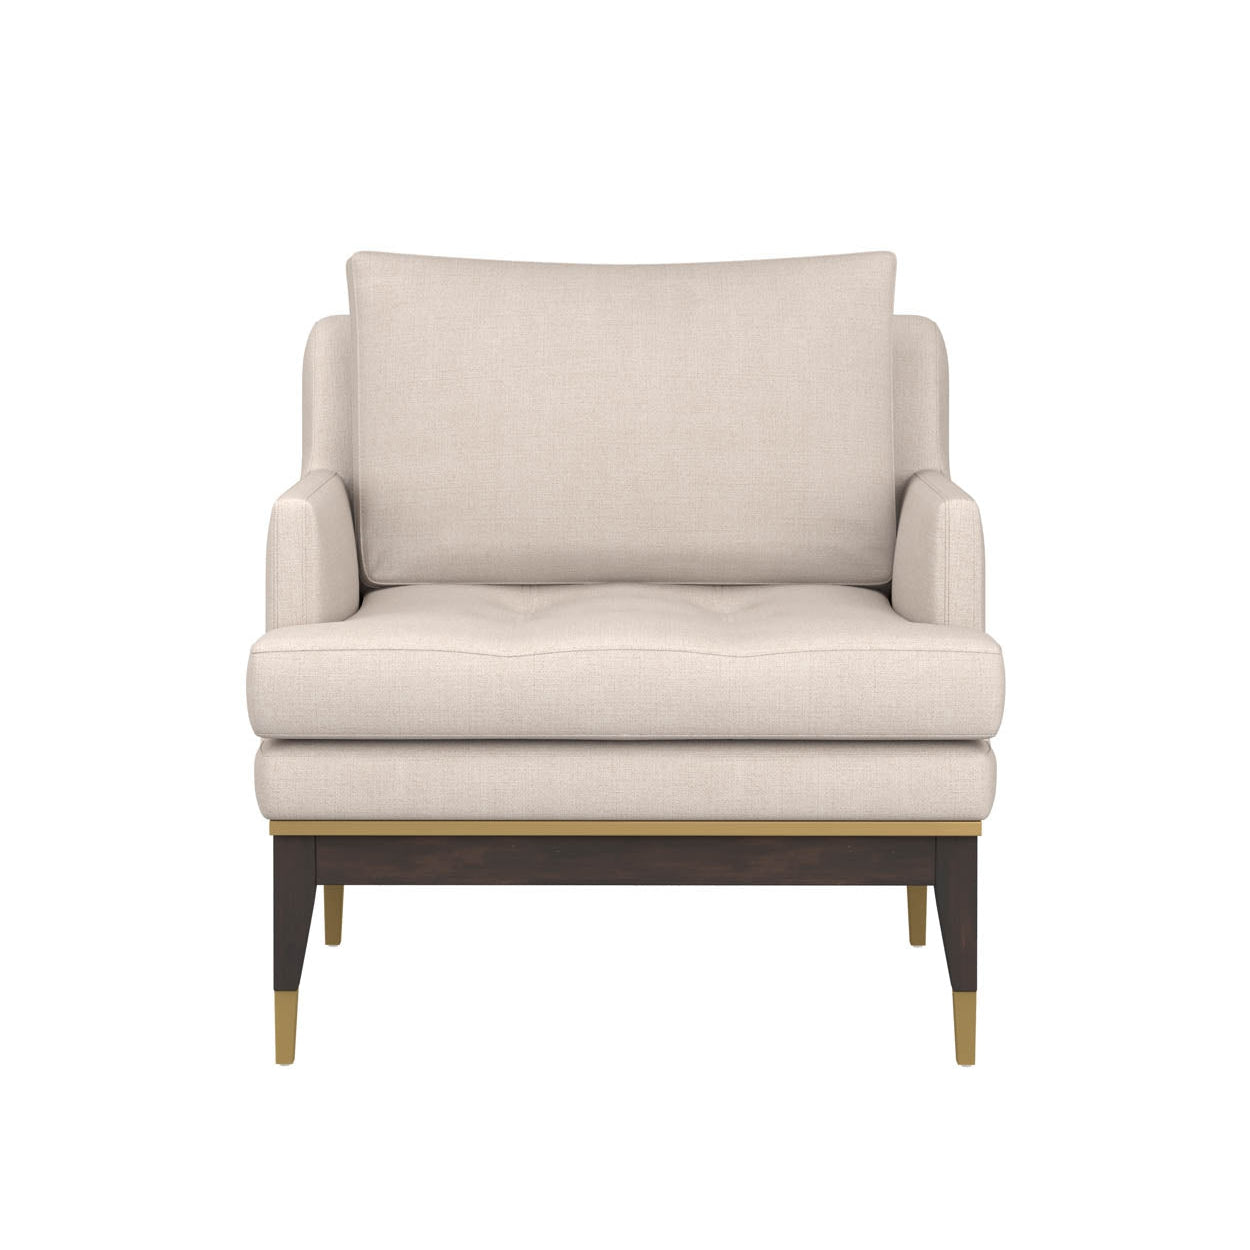 Beckette Lounge Chair - Home Elegance USA